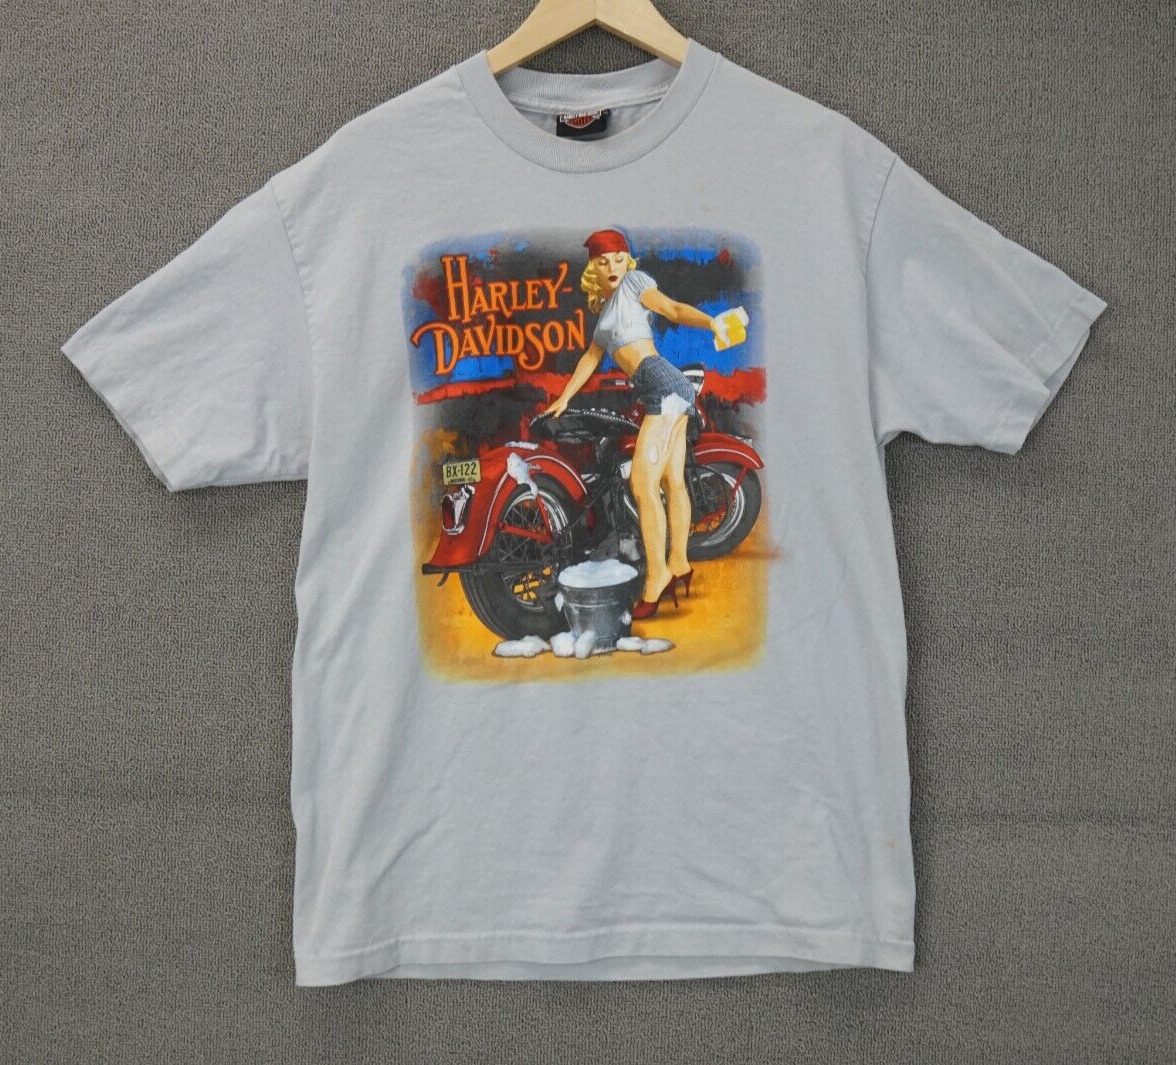 Harley Davidson 2016 Orlando Florida Tee Shirt Gray Size Large